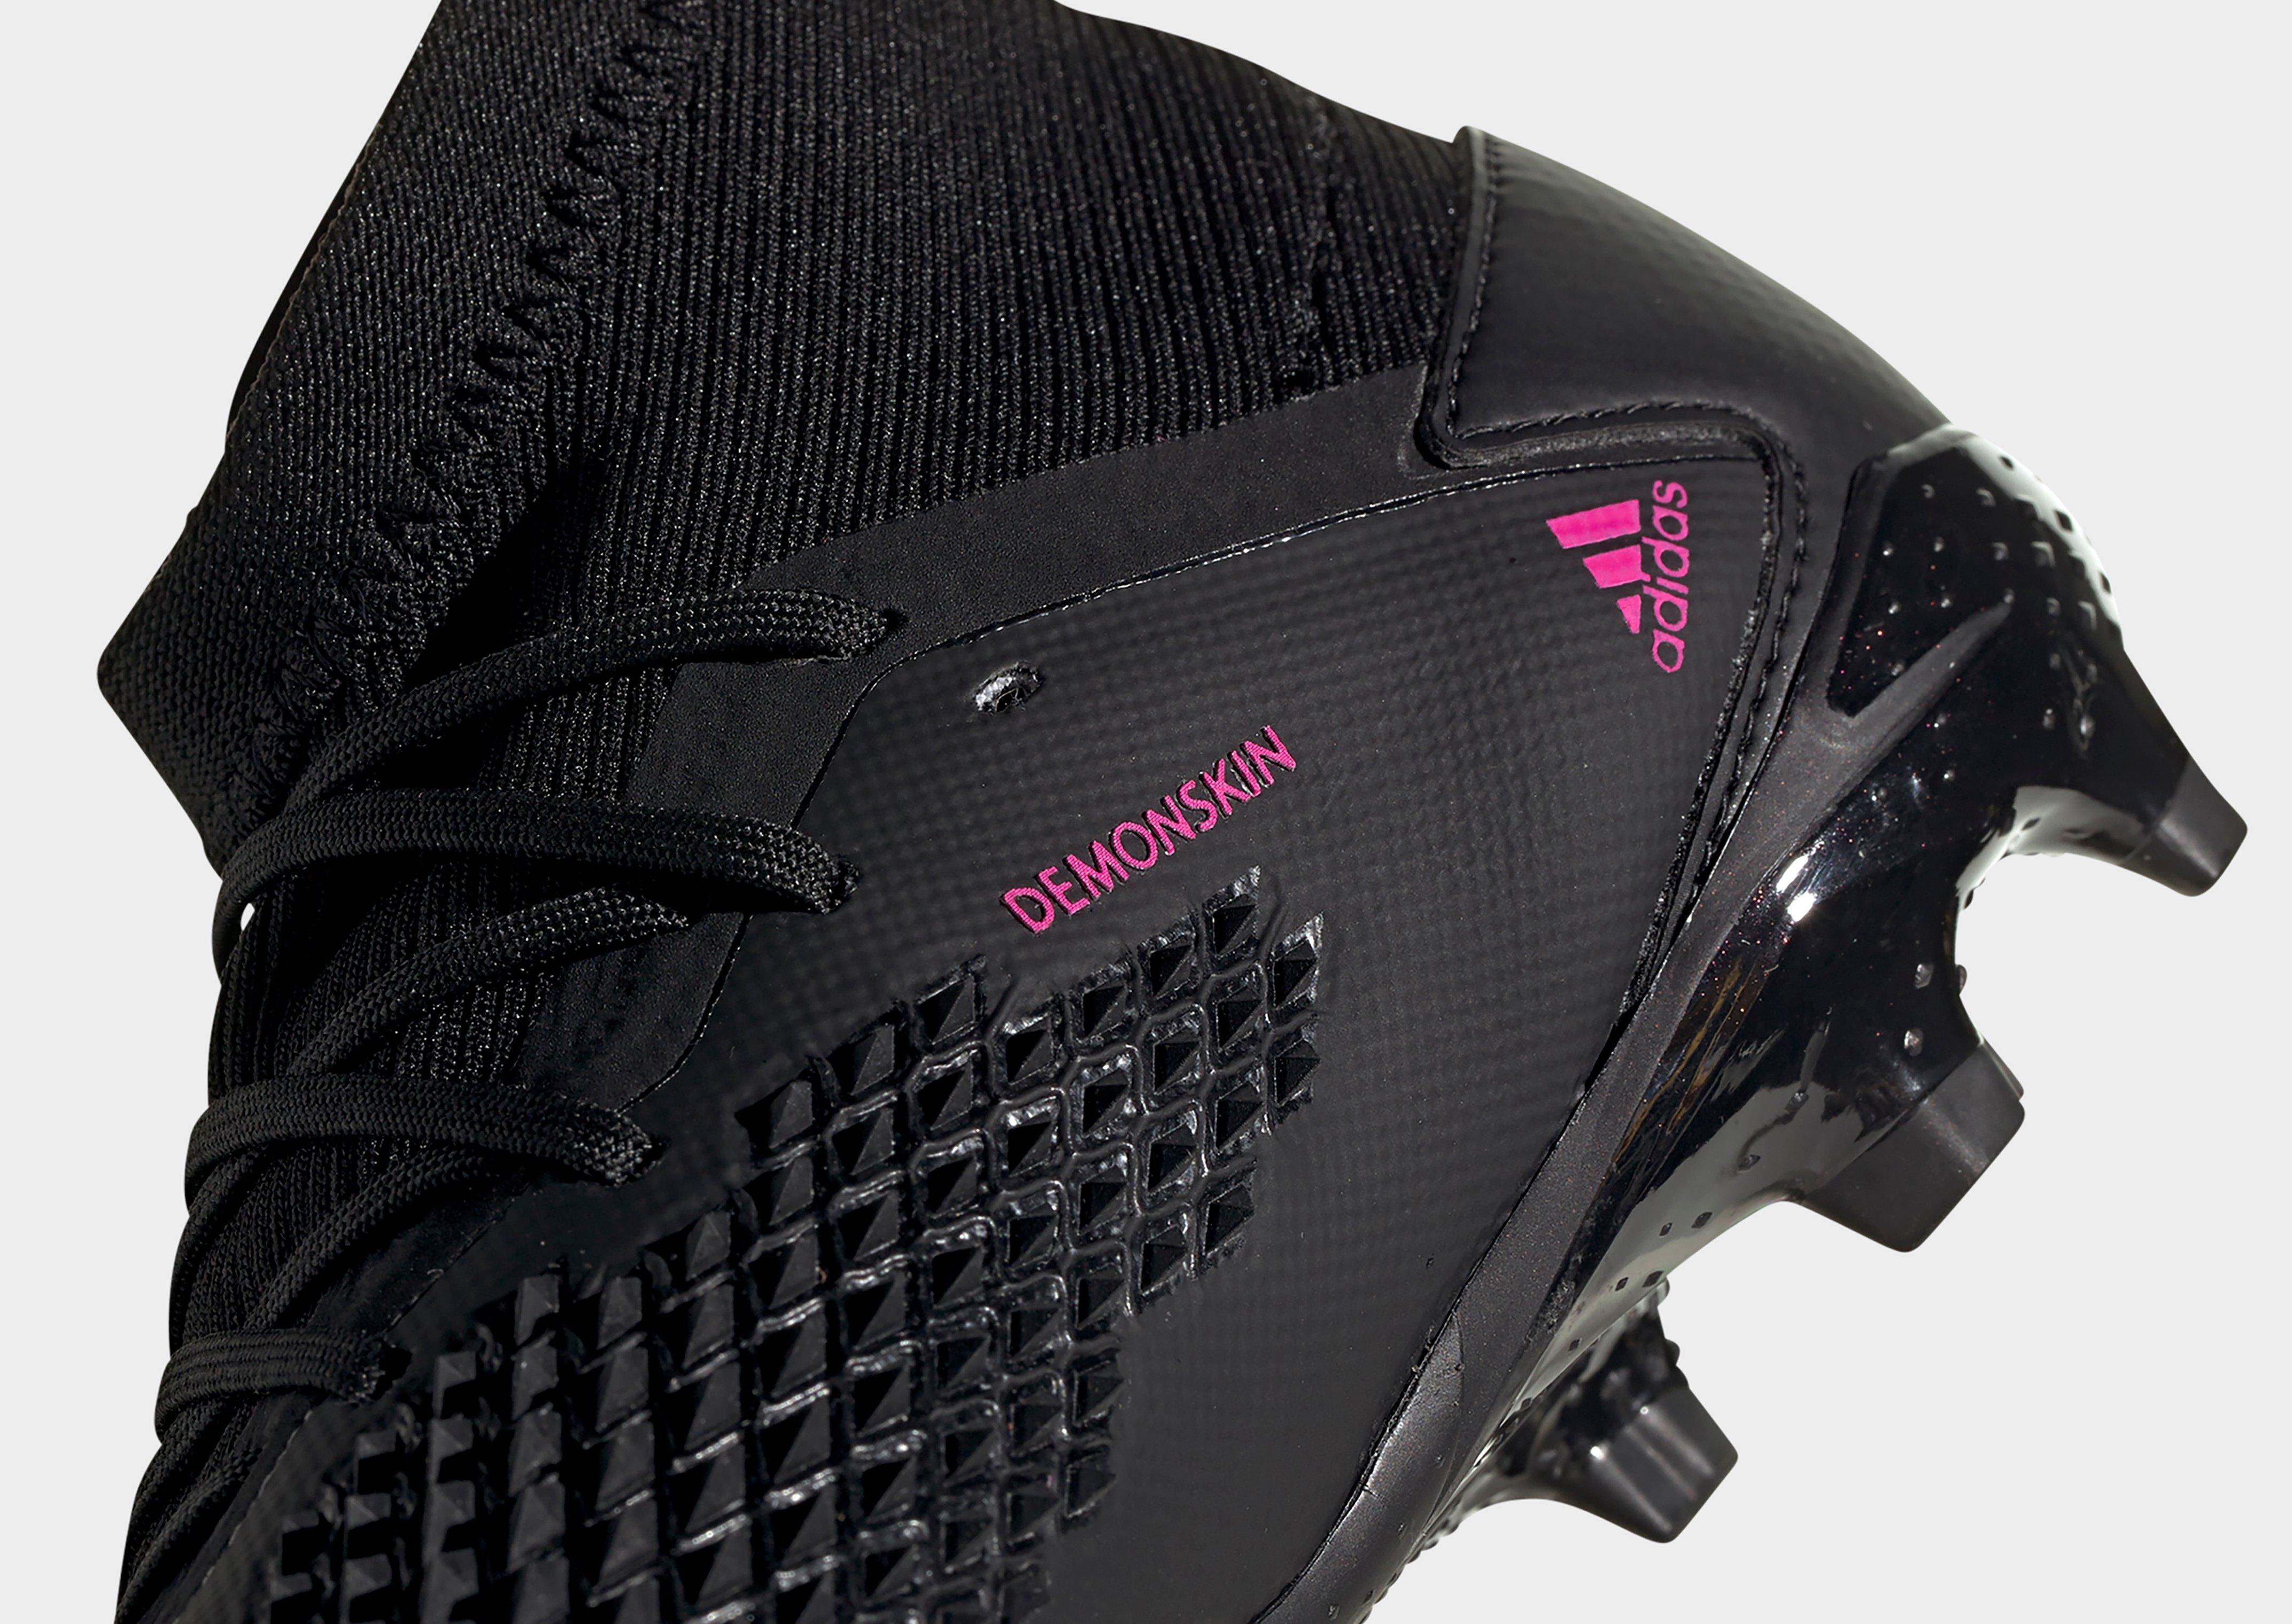 Adidas Predator 20.3 Trainers Black adidas Ireland